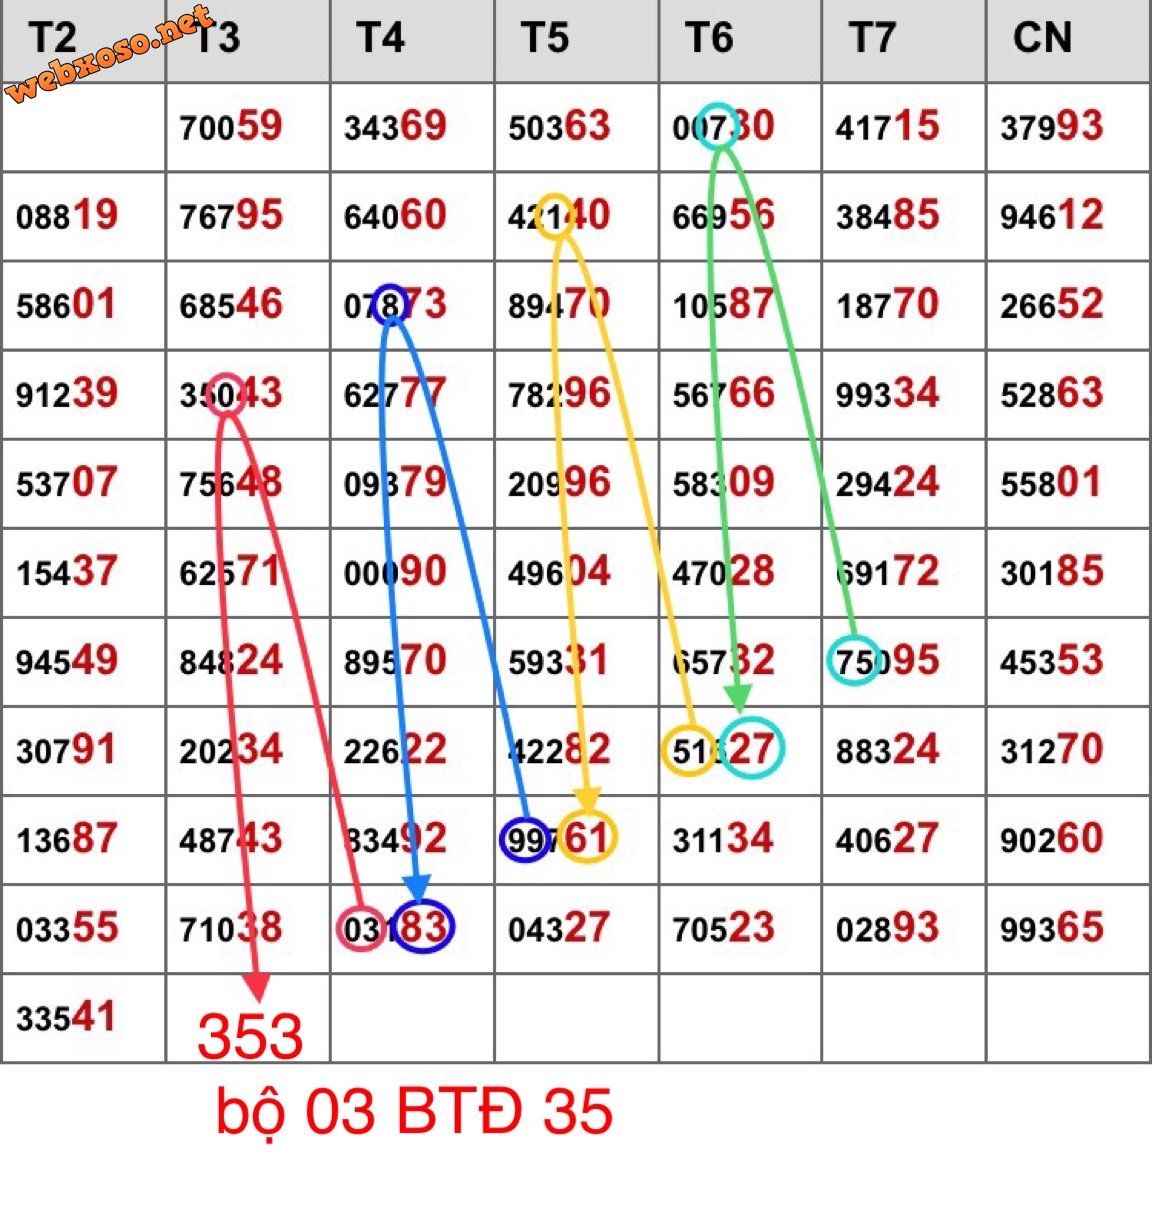 96A049FD-1816-4143-BDA6-C3F3E3D1E222.jpeg